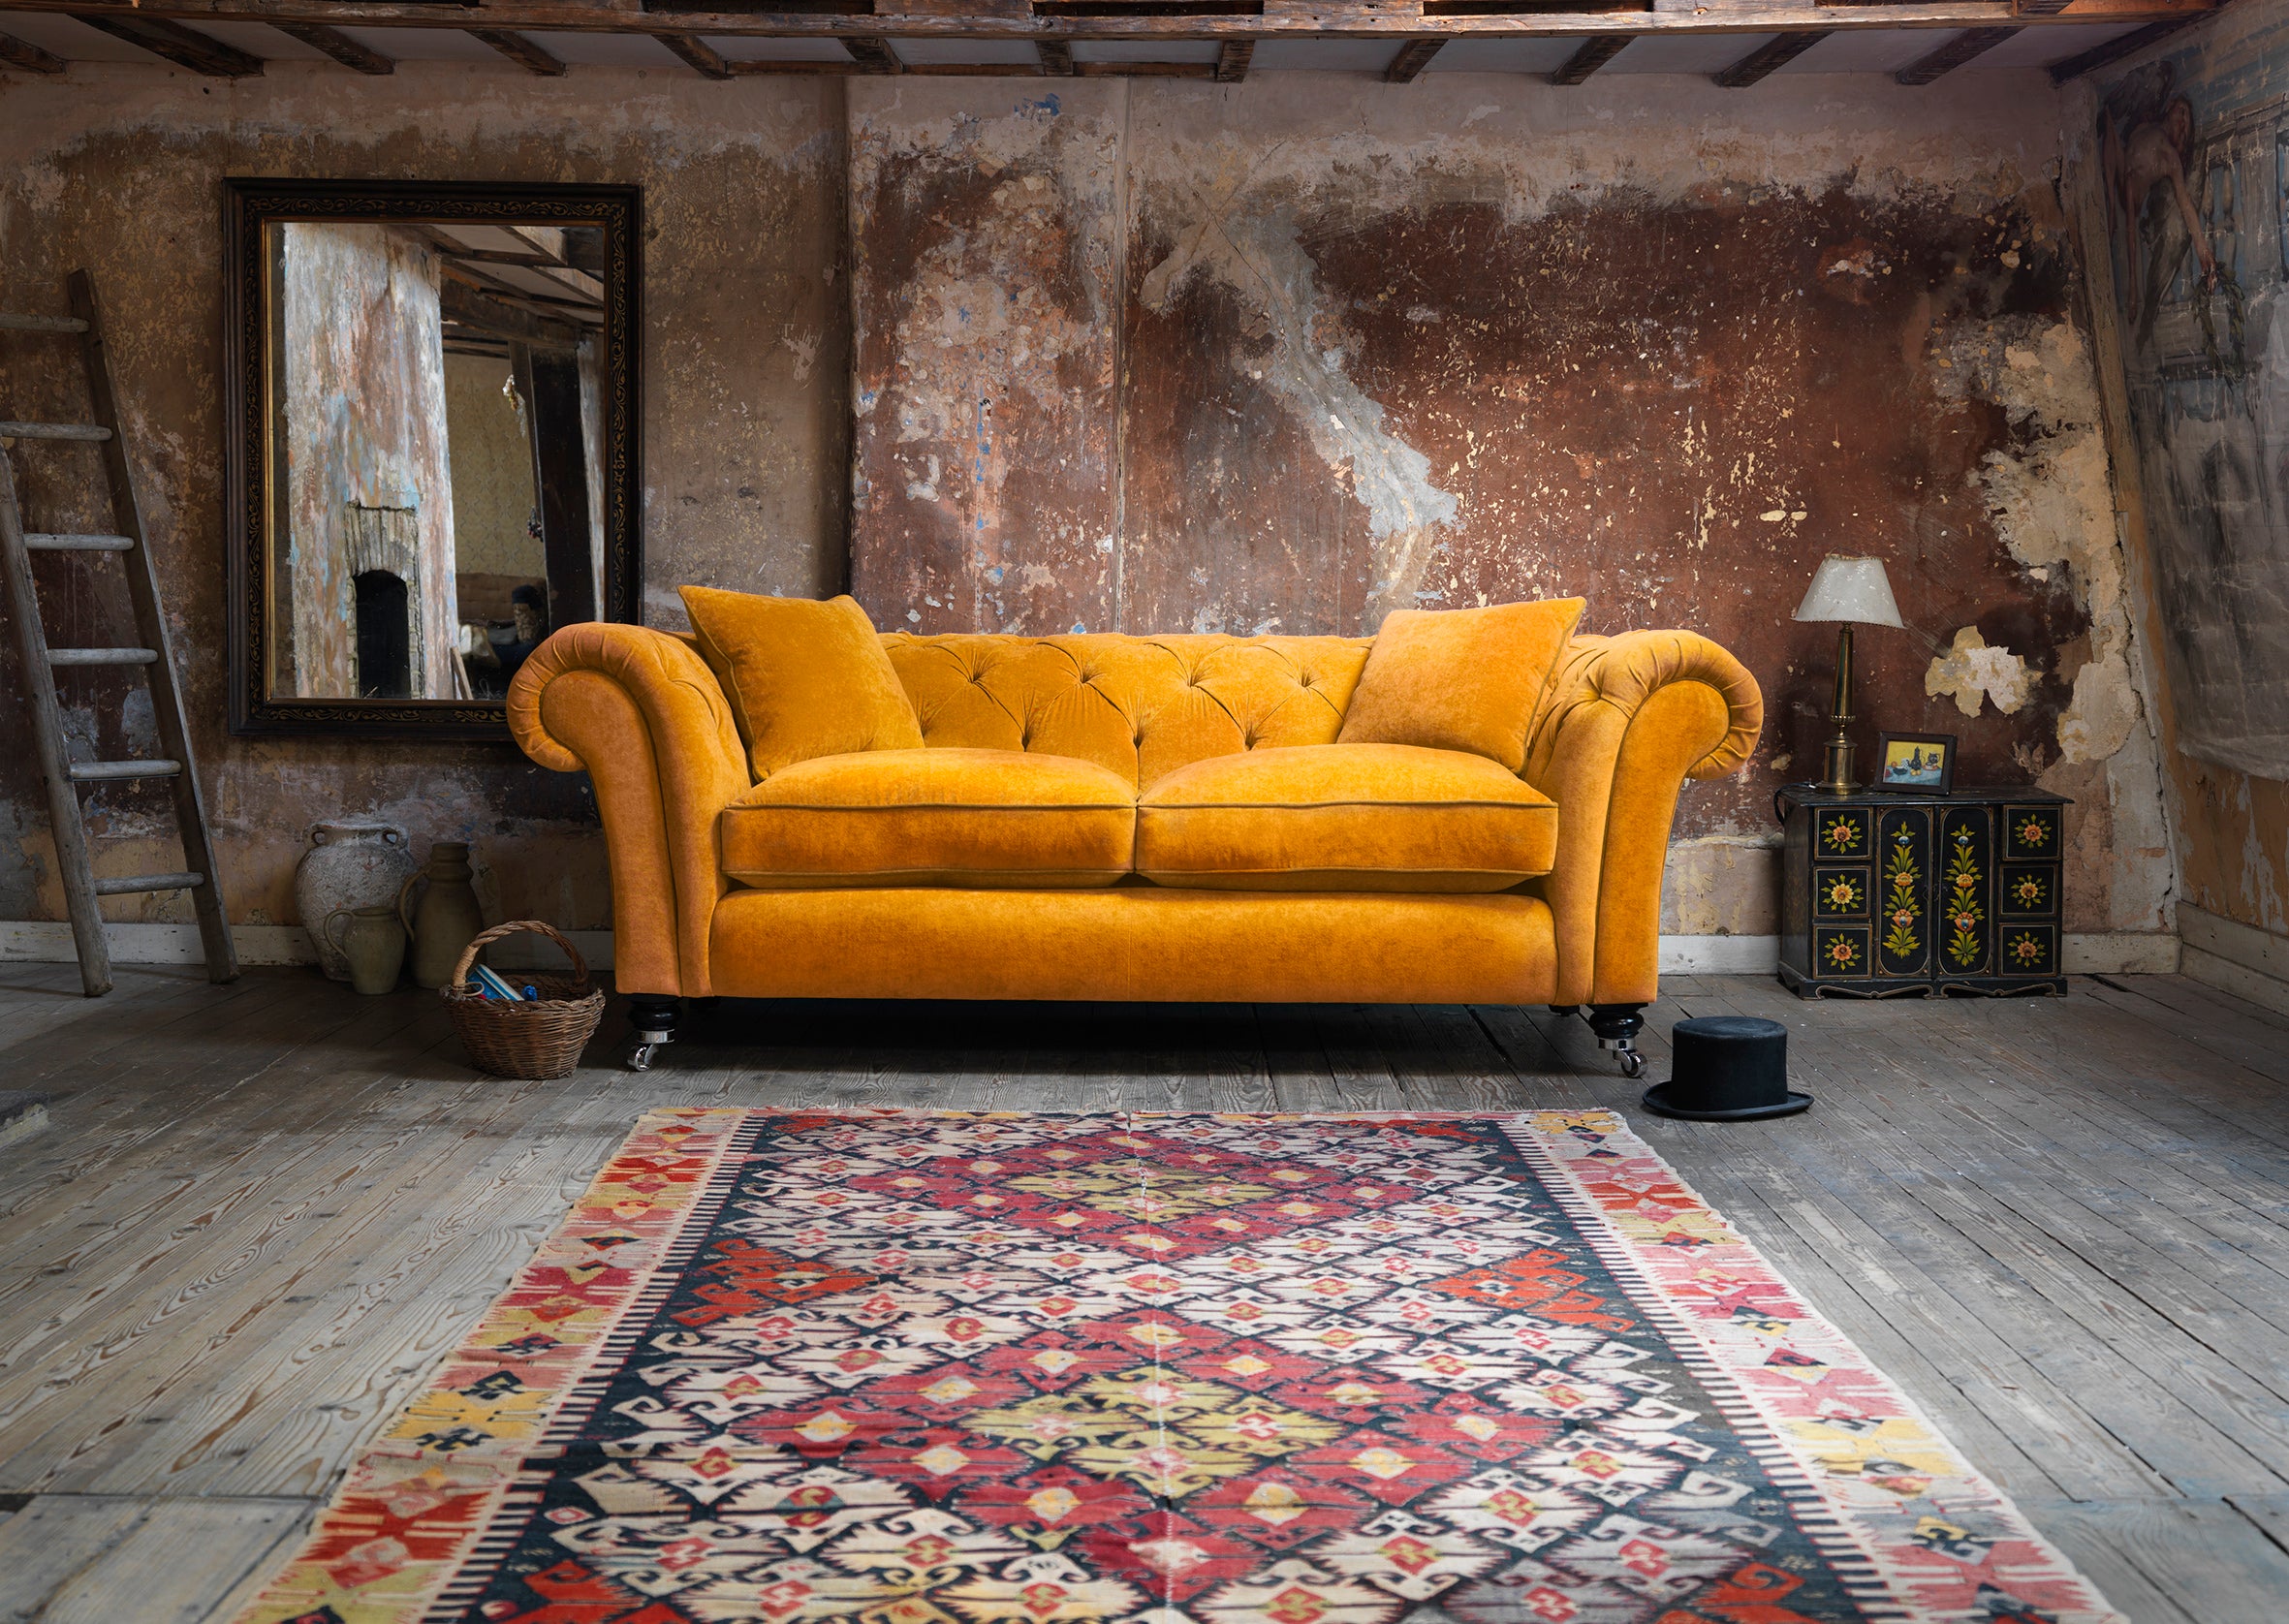 behuizing Van toepassing Alstublieft Made in Britain: Sofa Workshop | The Independent | The Independent